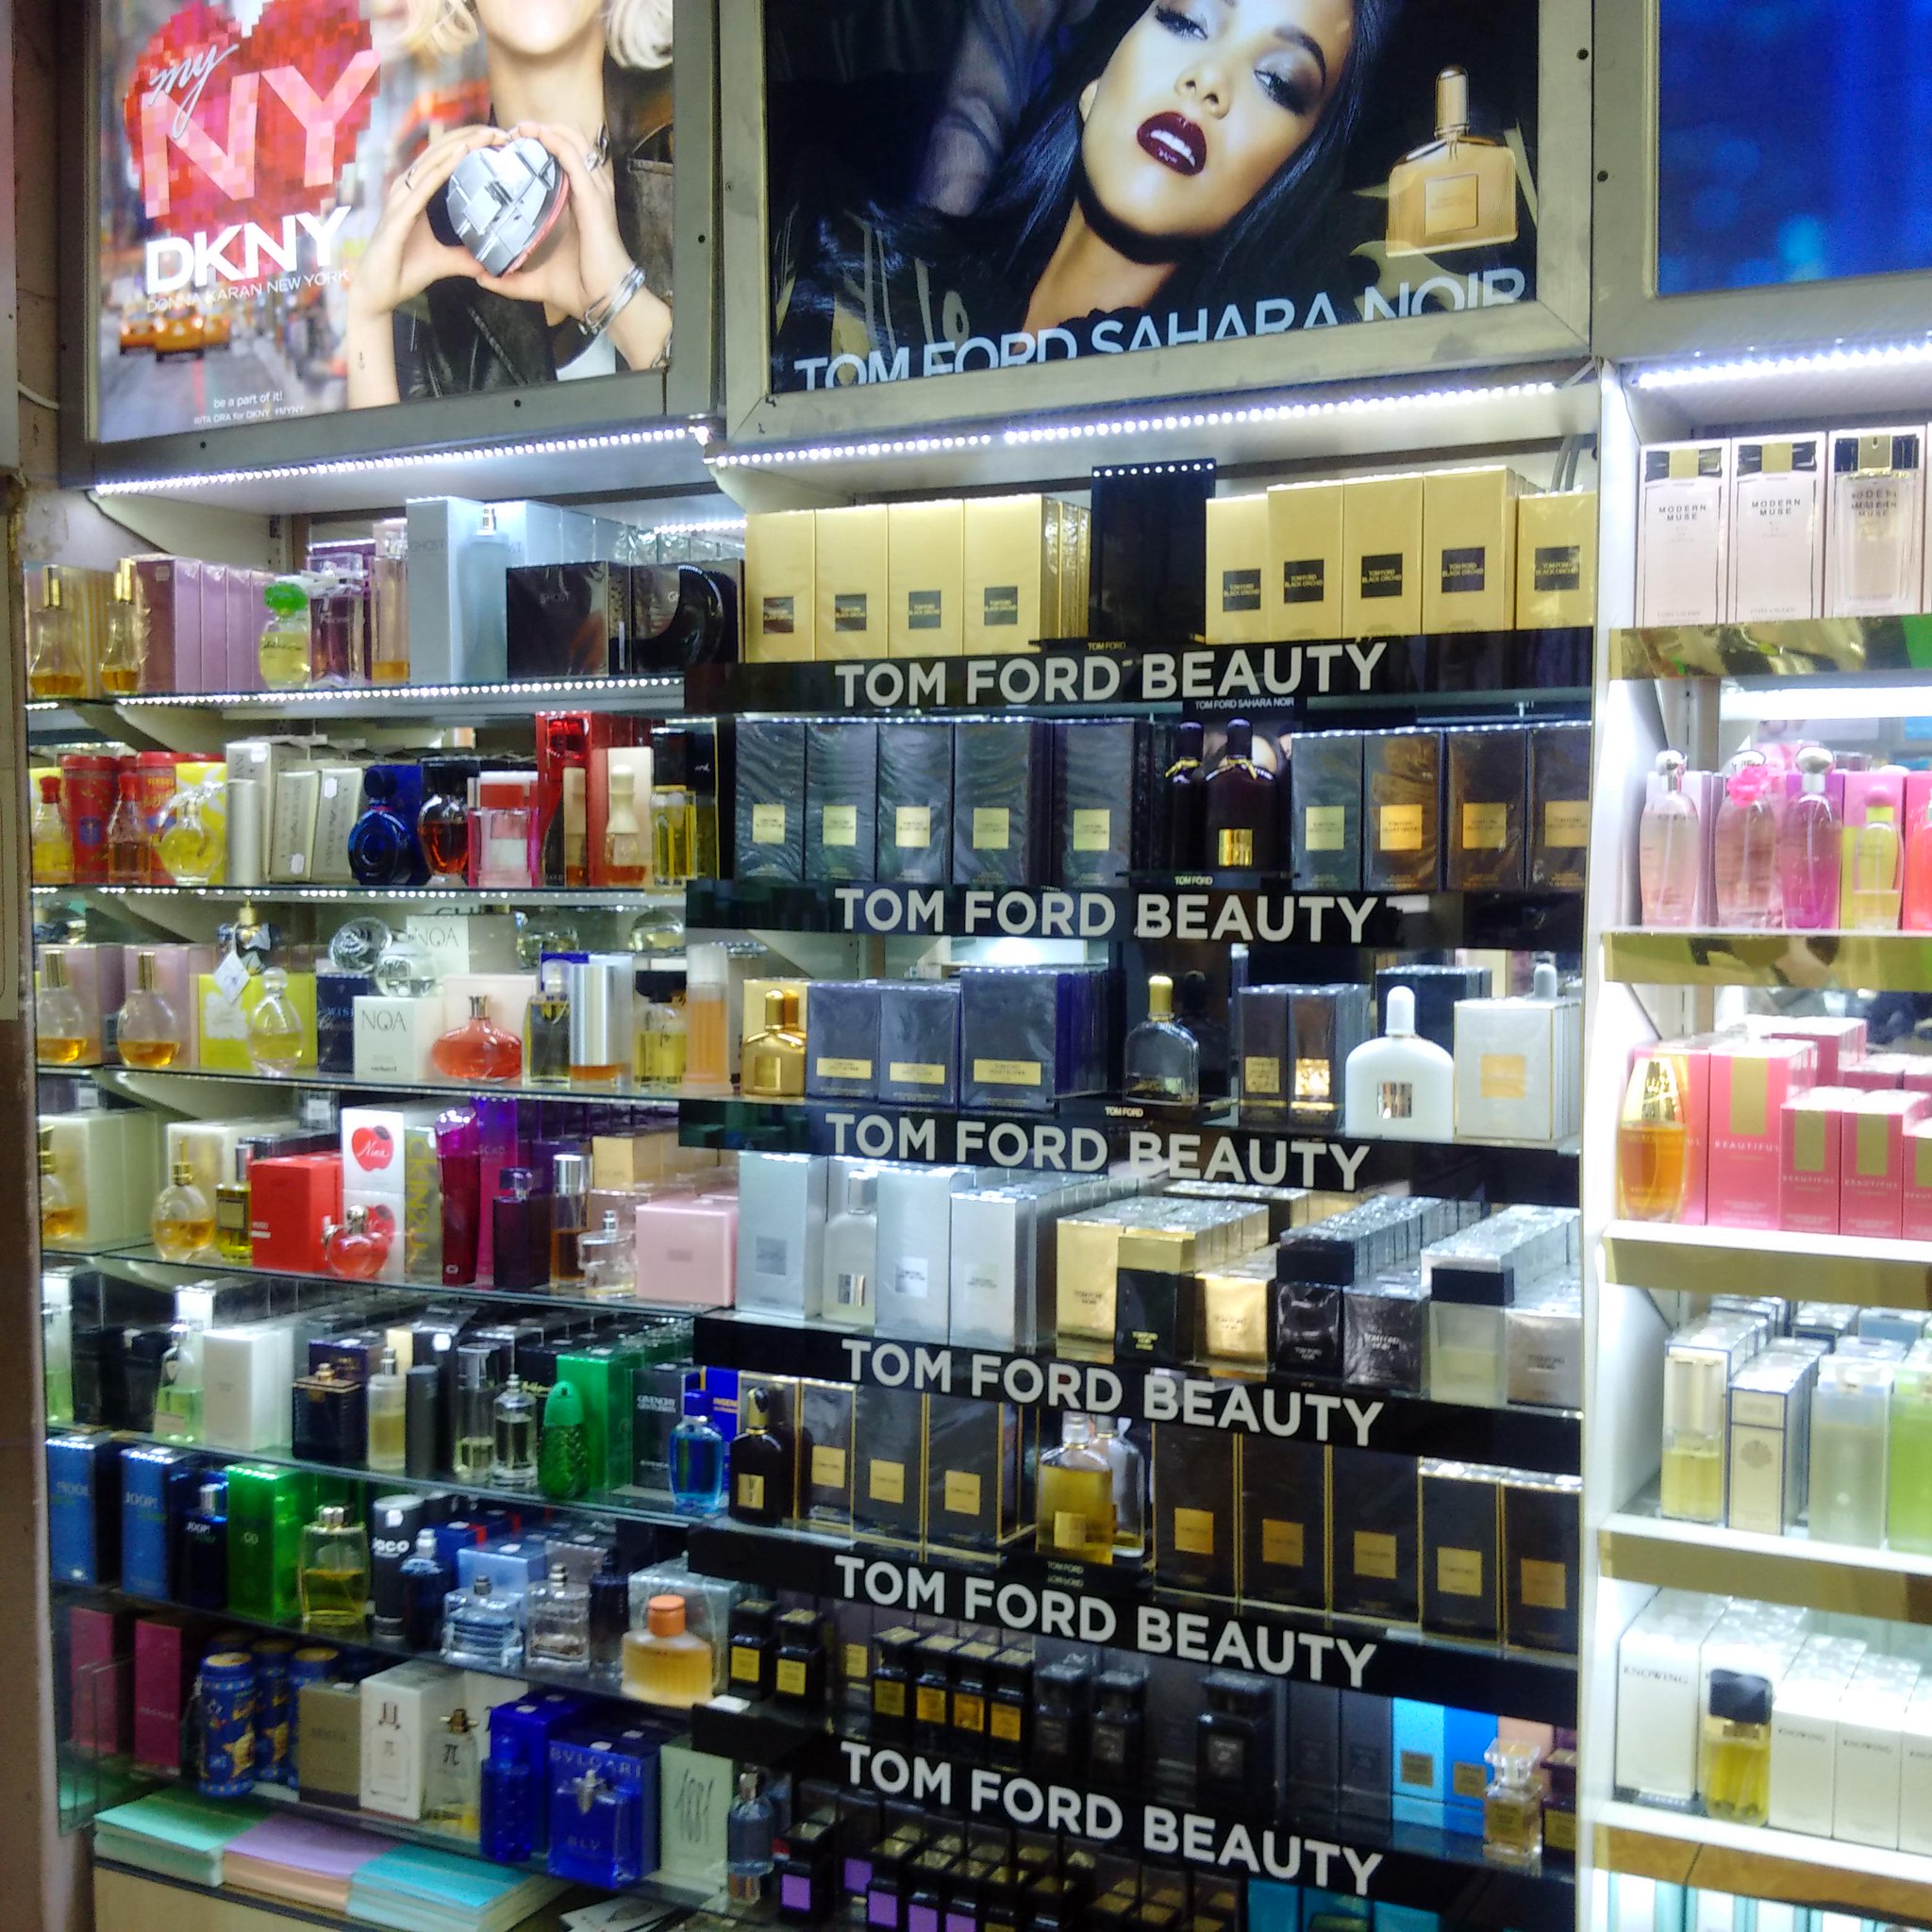 Duchess of Healing on X: My Top Five Fragrances #PerfumistaTweet